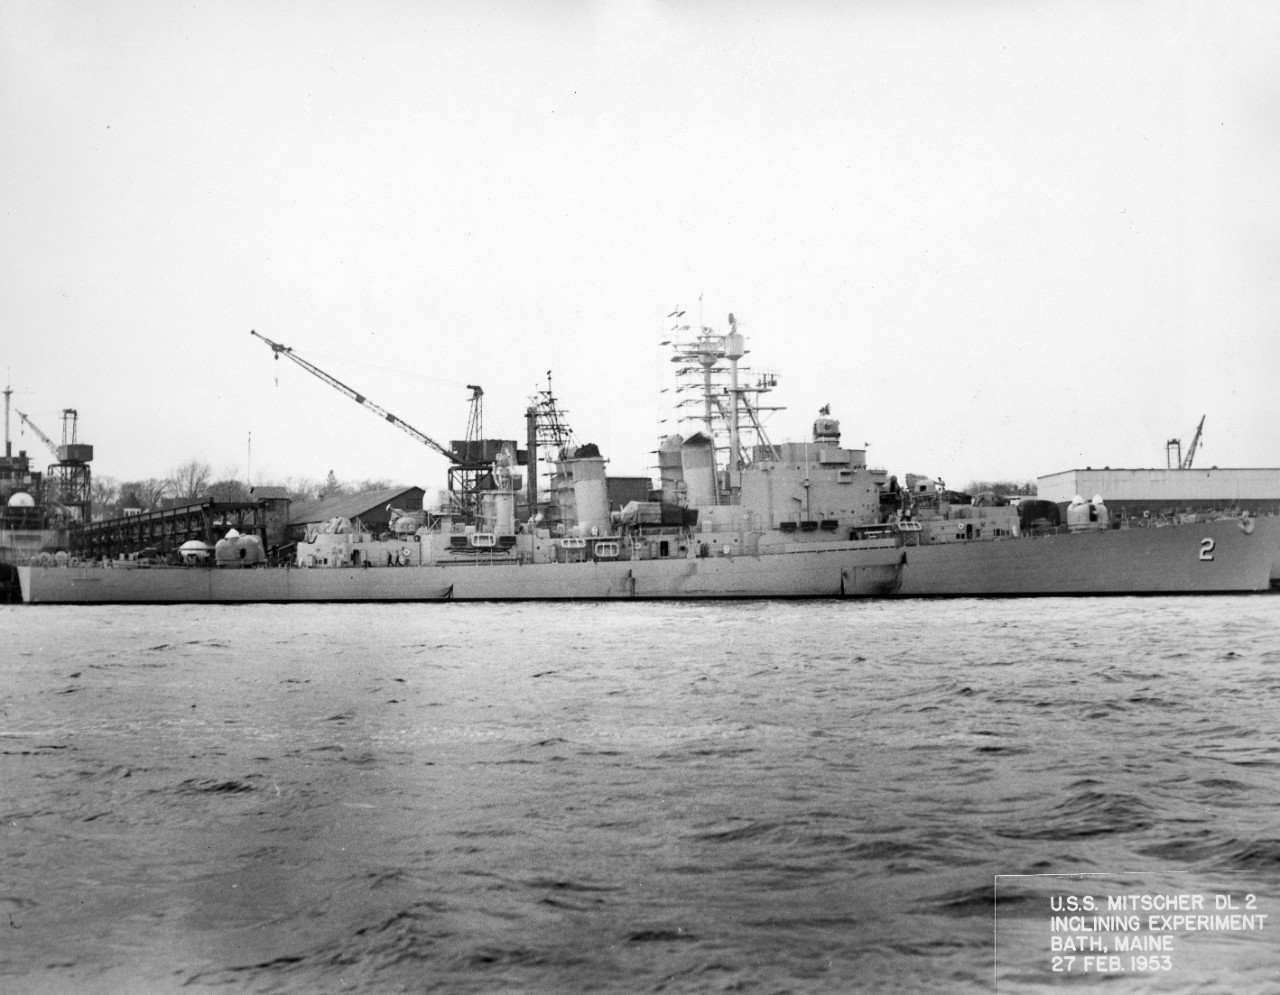 USS Mitscher (DL-2) inclining experiment, Bath, Maine. February 27, 1953.